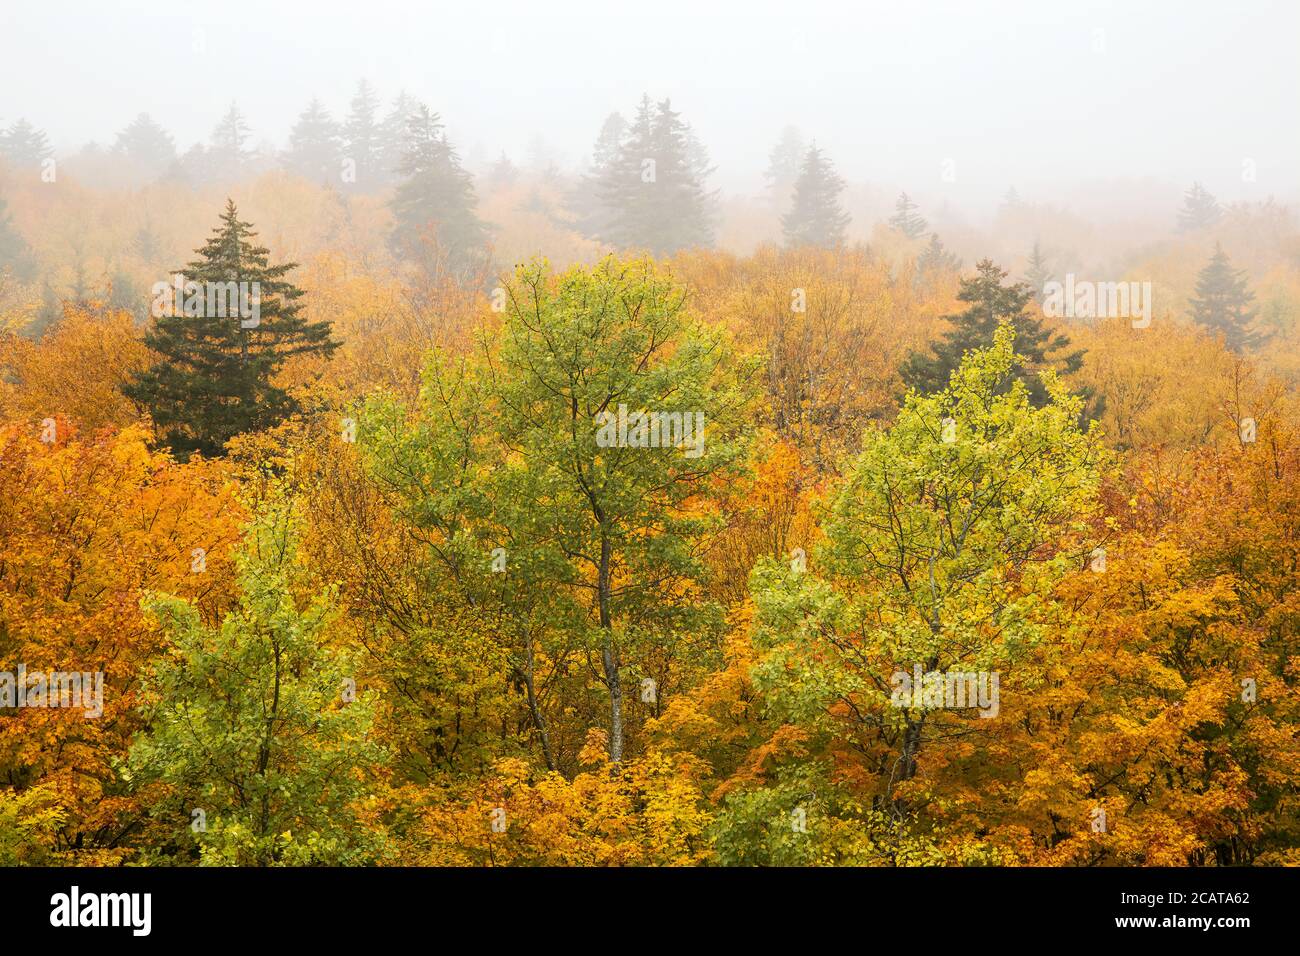 Foggy forest near Wentworth, Nova Scotia, Canada Stock Photo